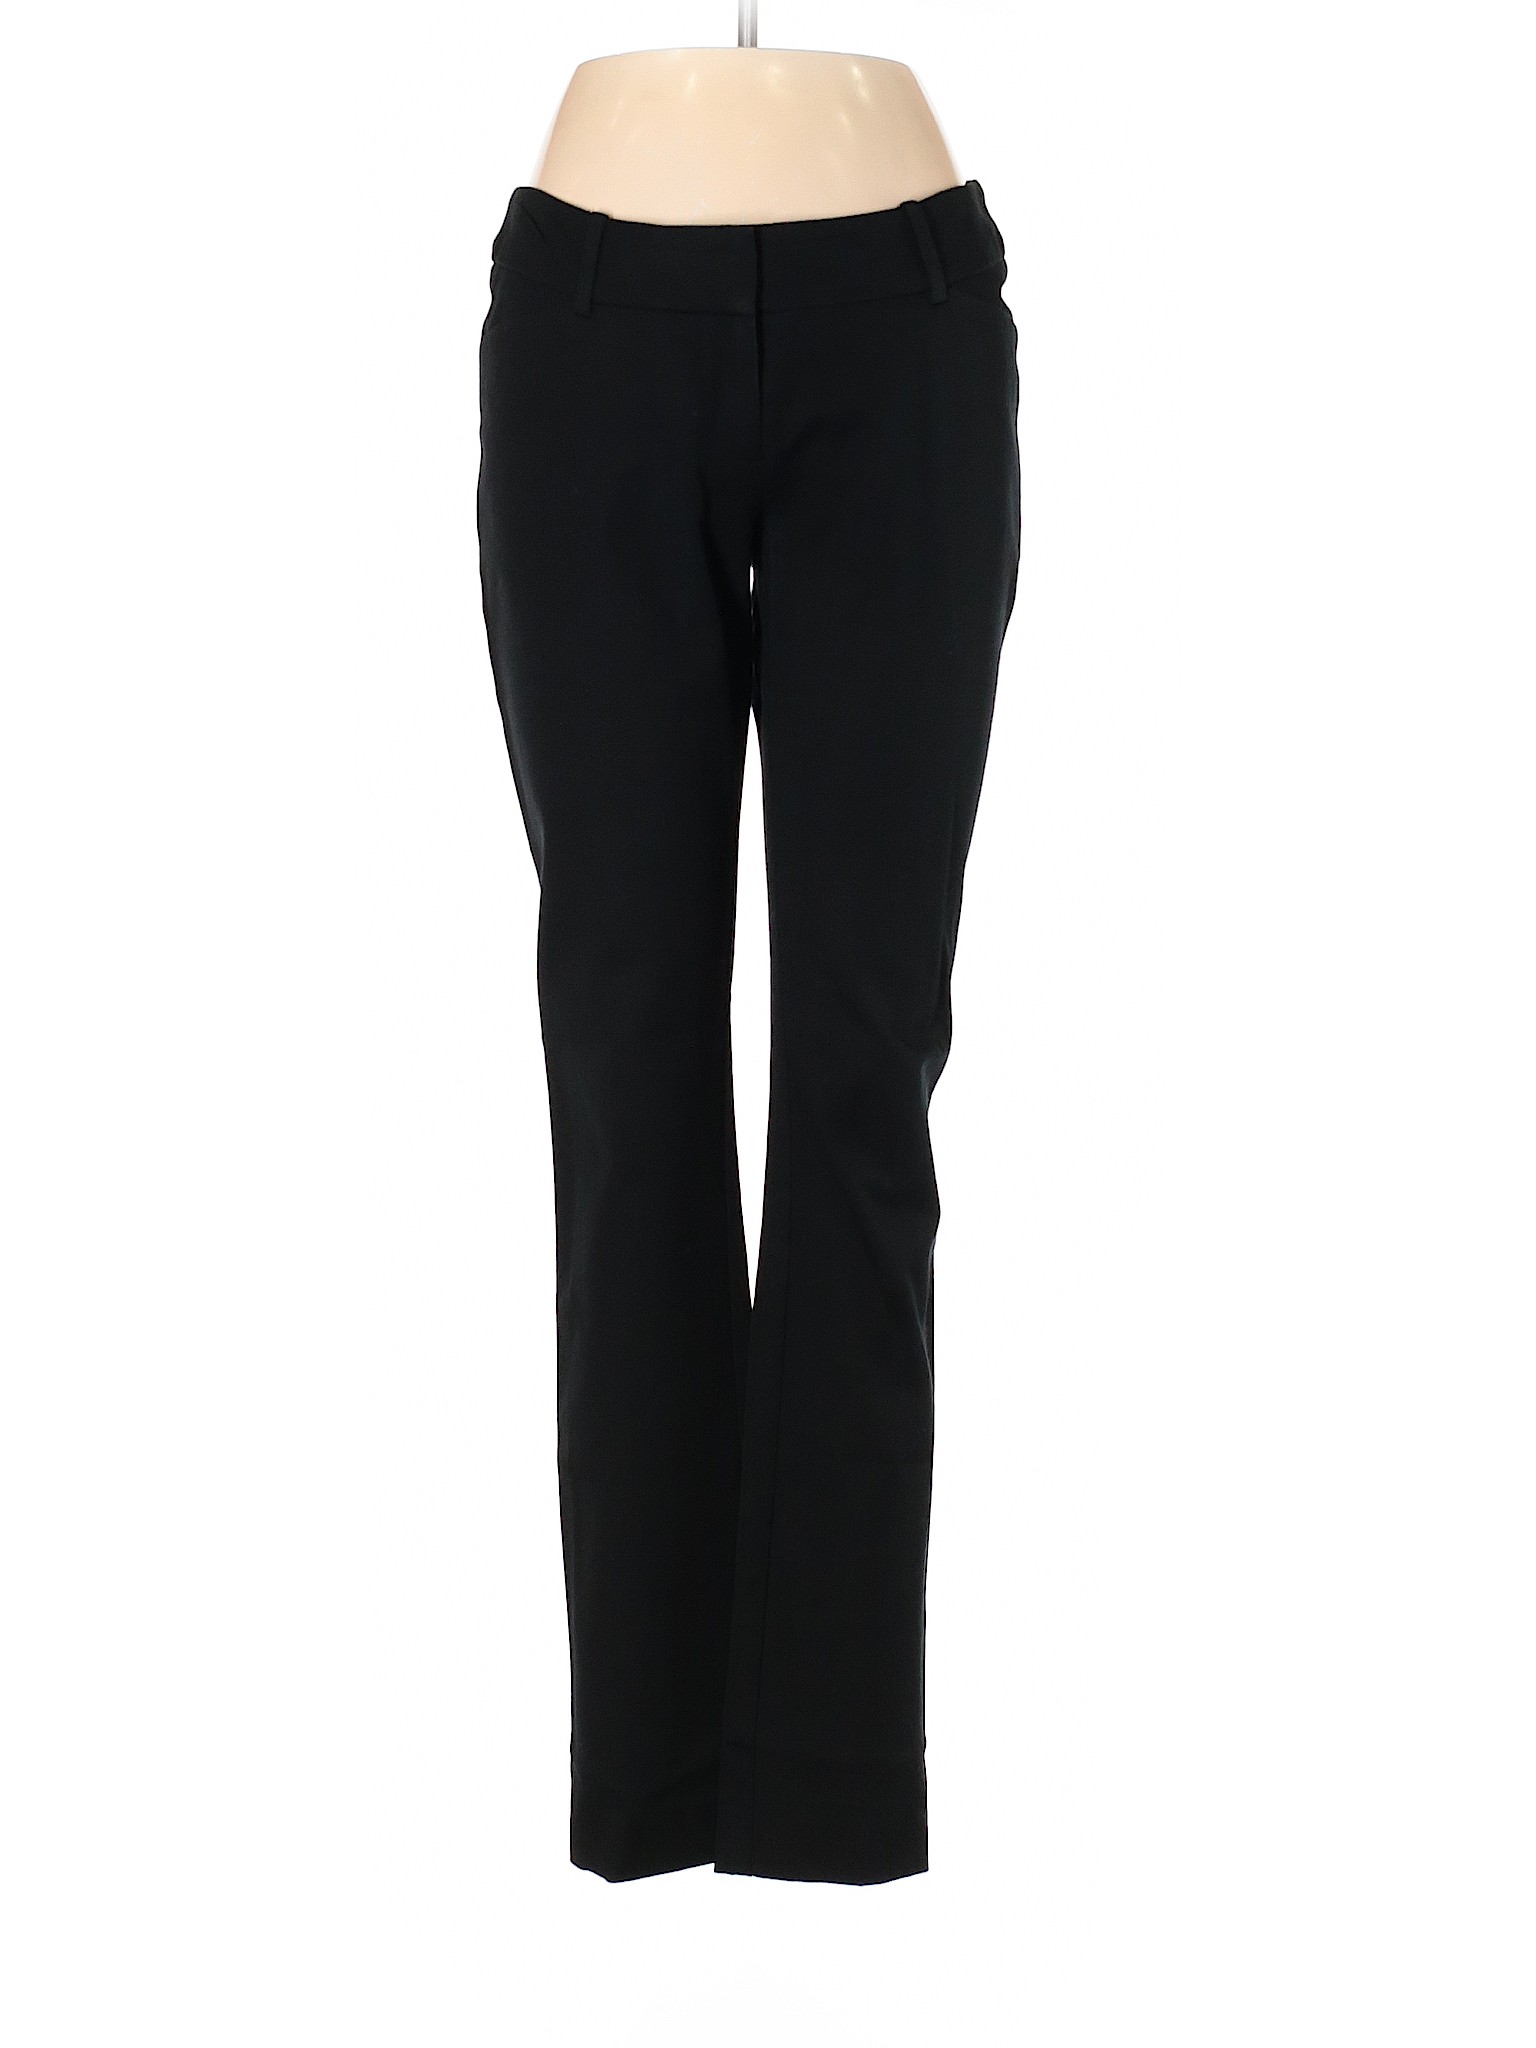 Mossimo Women Black Dress Pants 6 | eBay